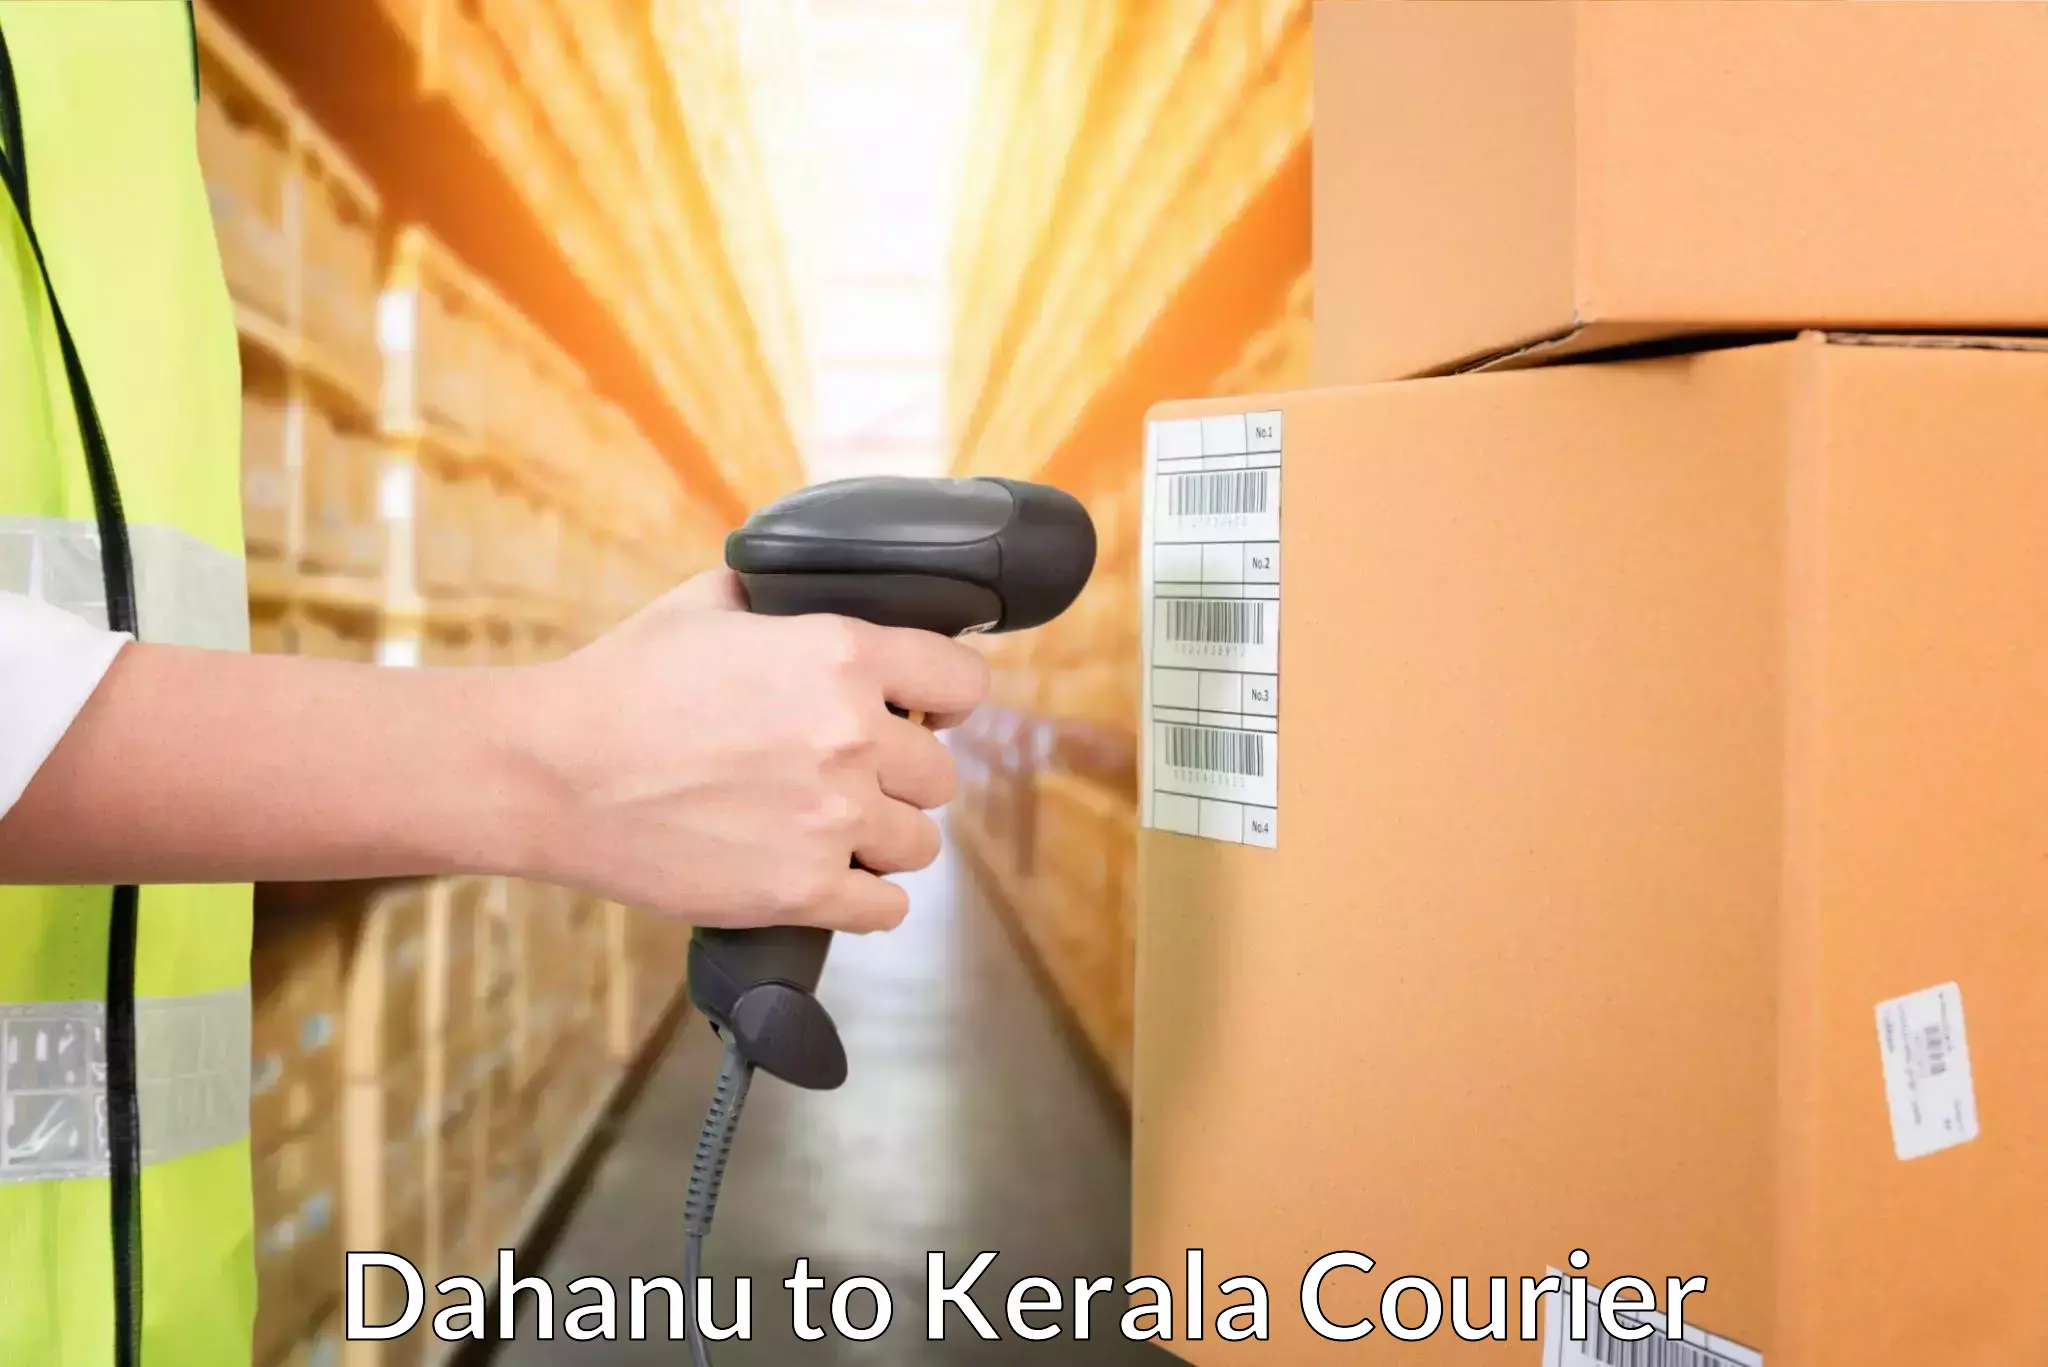 Logistics service provider Dahanu to Kerala